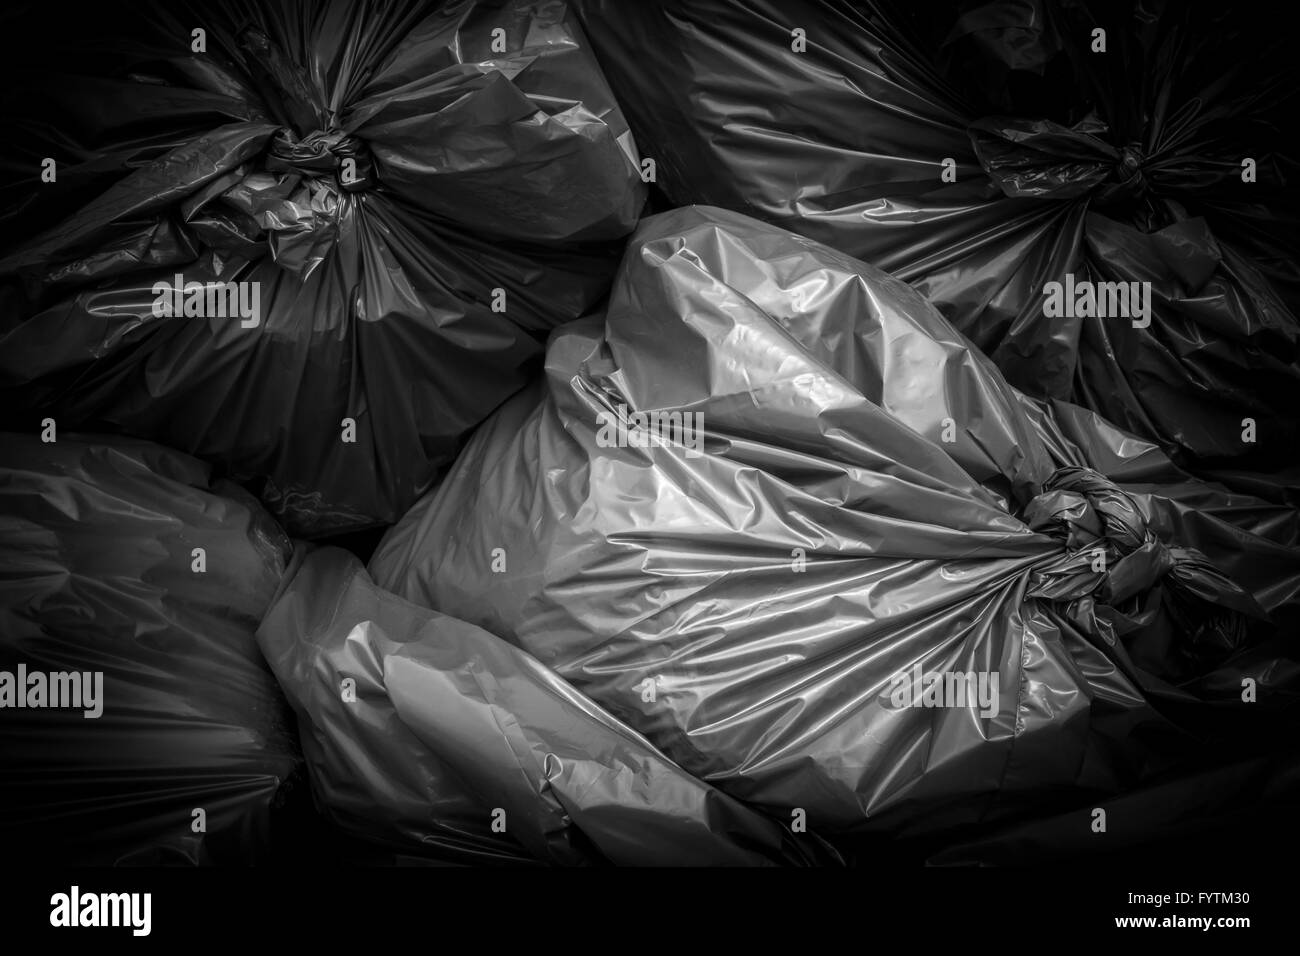 Garbage bags Stock Photo